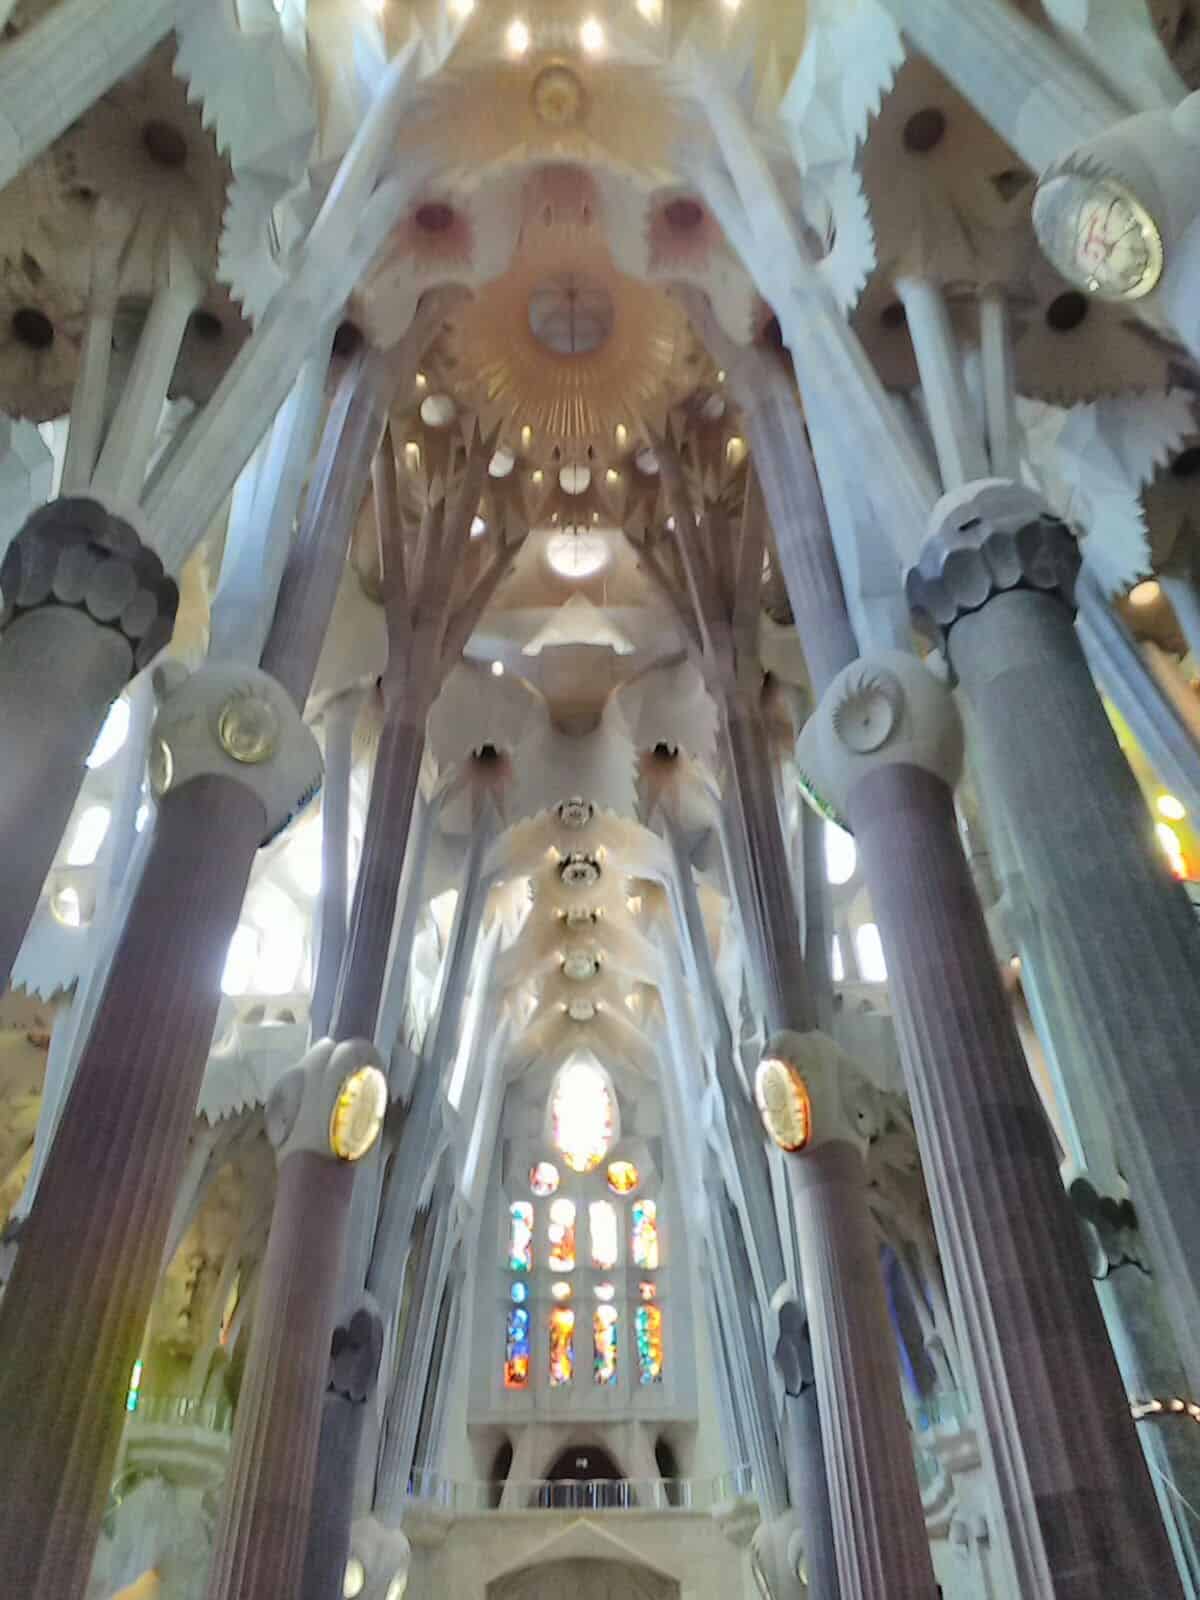 The high ceiling inside the Sagrada Familia in Barcelona, Spain